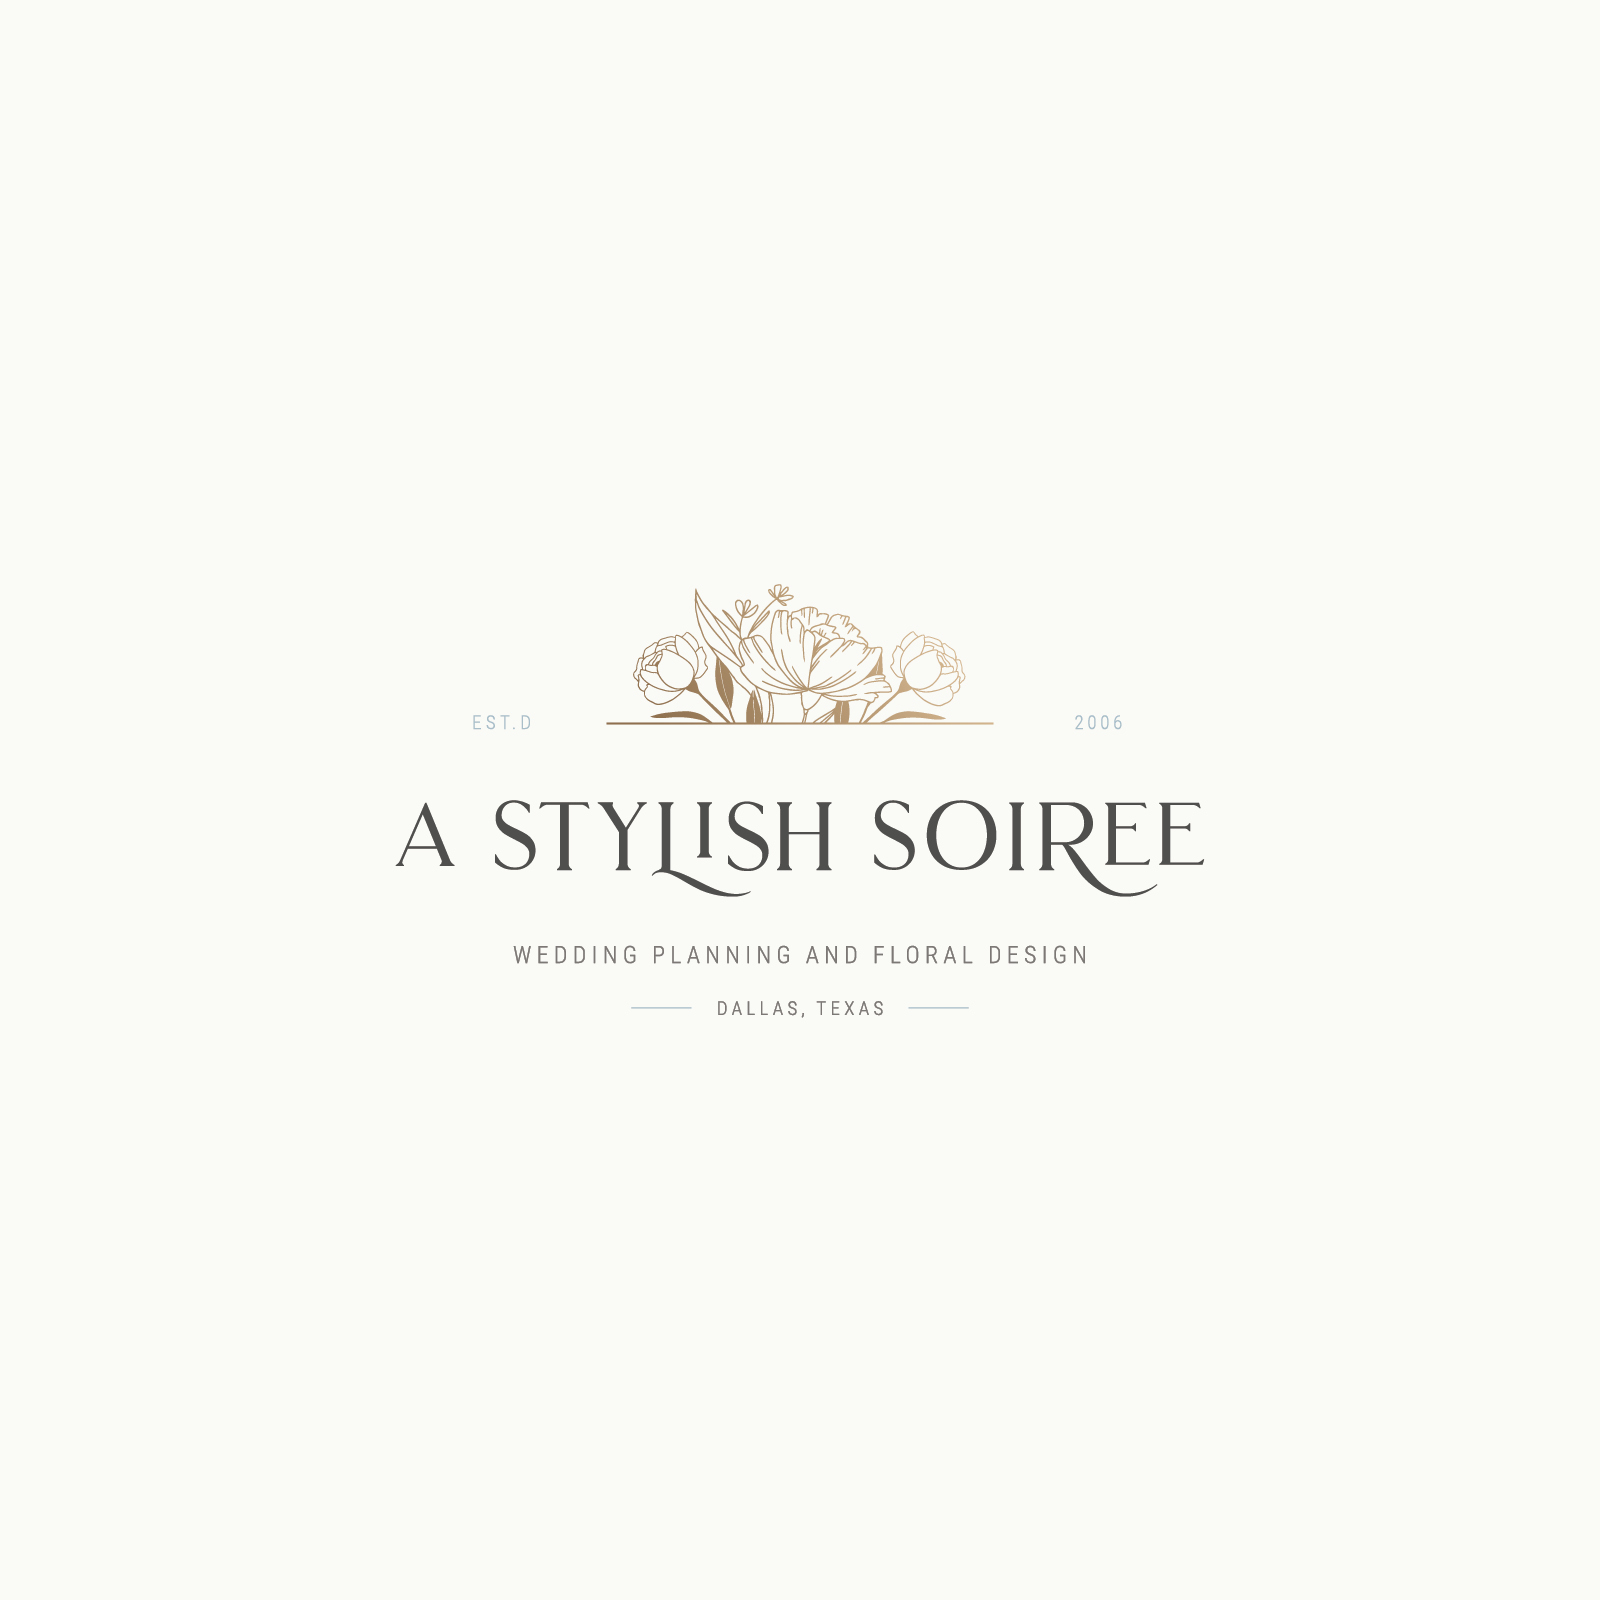 Wedding Planner Brand and Website Design: A Stylish Soiree by Sarah Ann Design, Brand Designer for Creatives